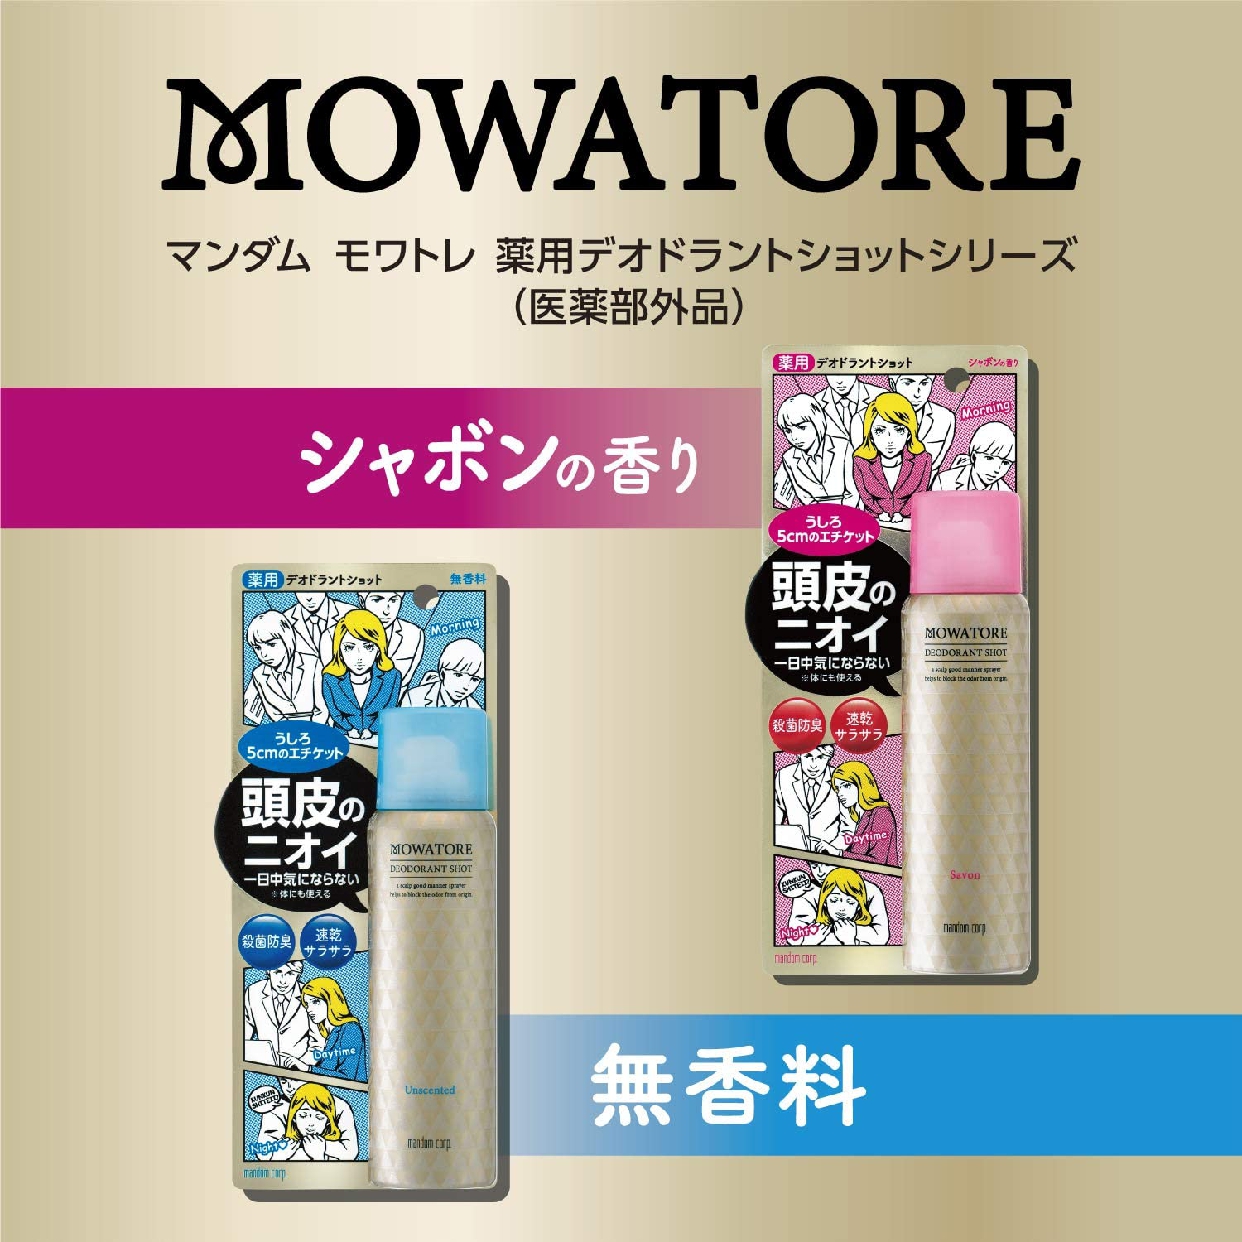 MOWATORE(モワトレ) 薬用デオドラントショットの商品画像7 